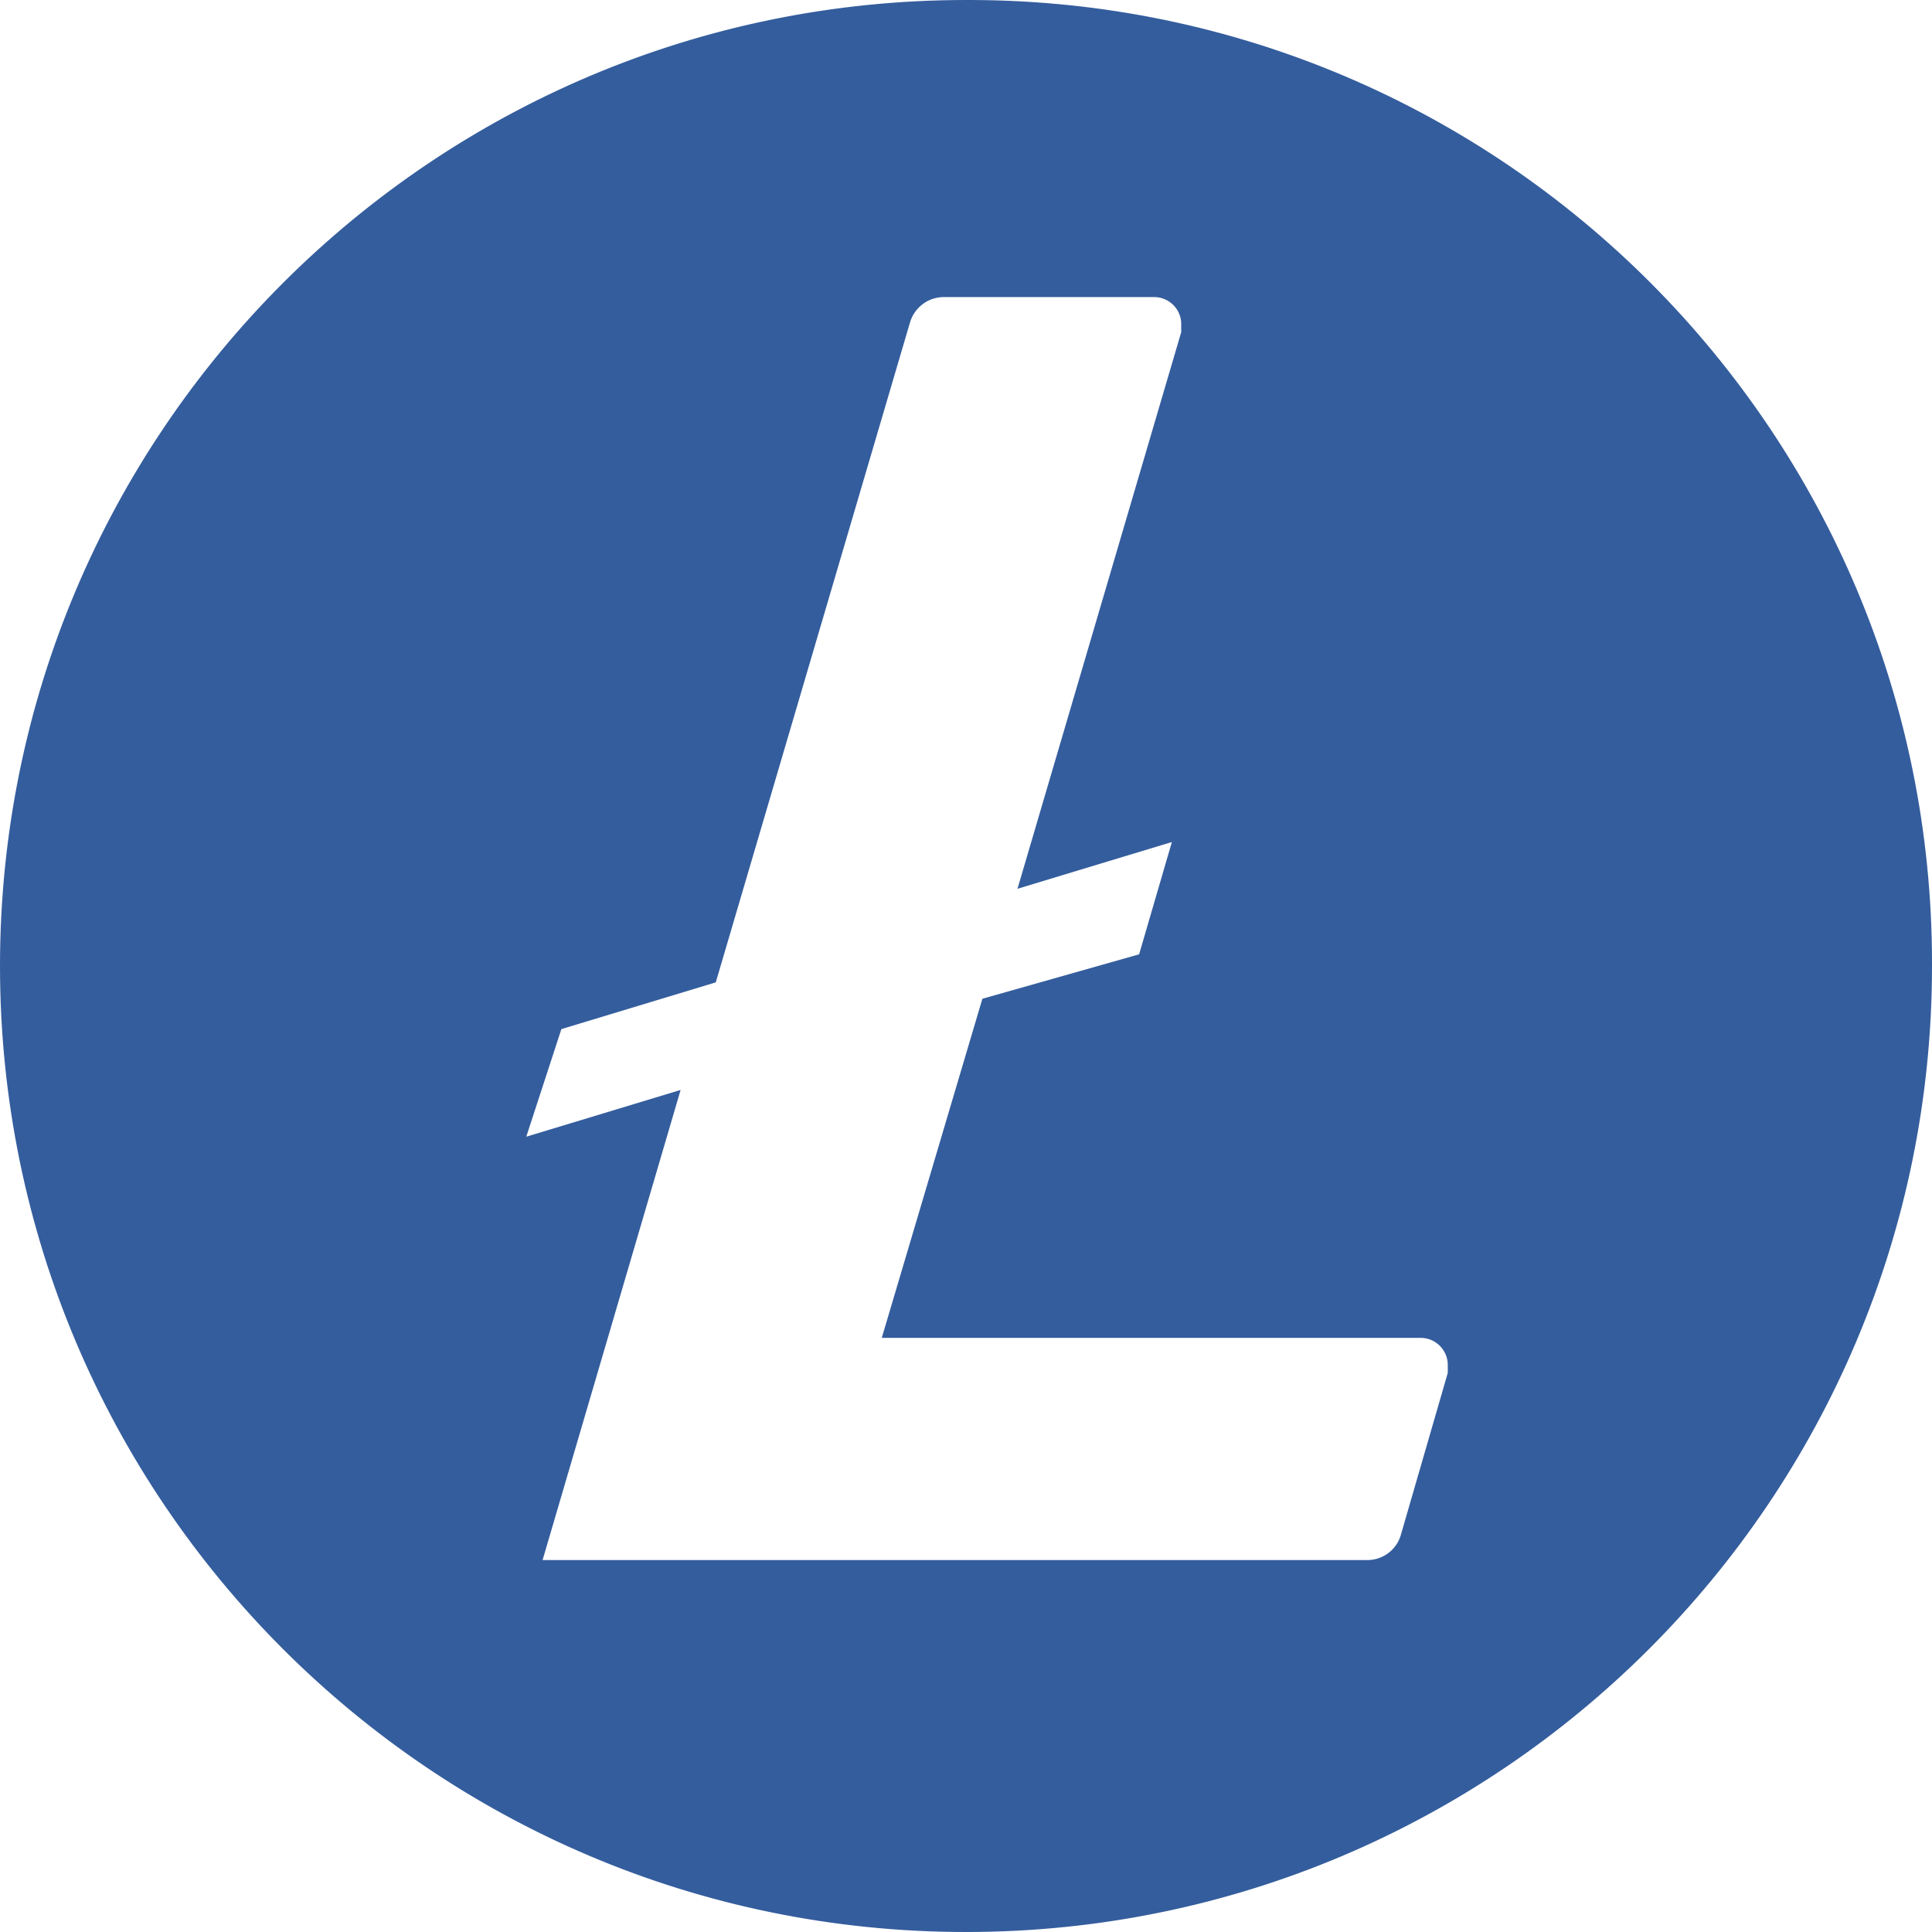 Litecoin (LTC) Price Prediction: LTC May Target the Next Psychological Price Level